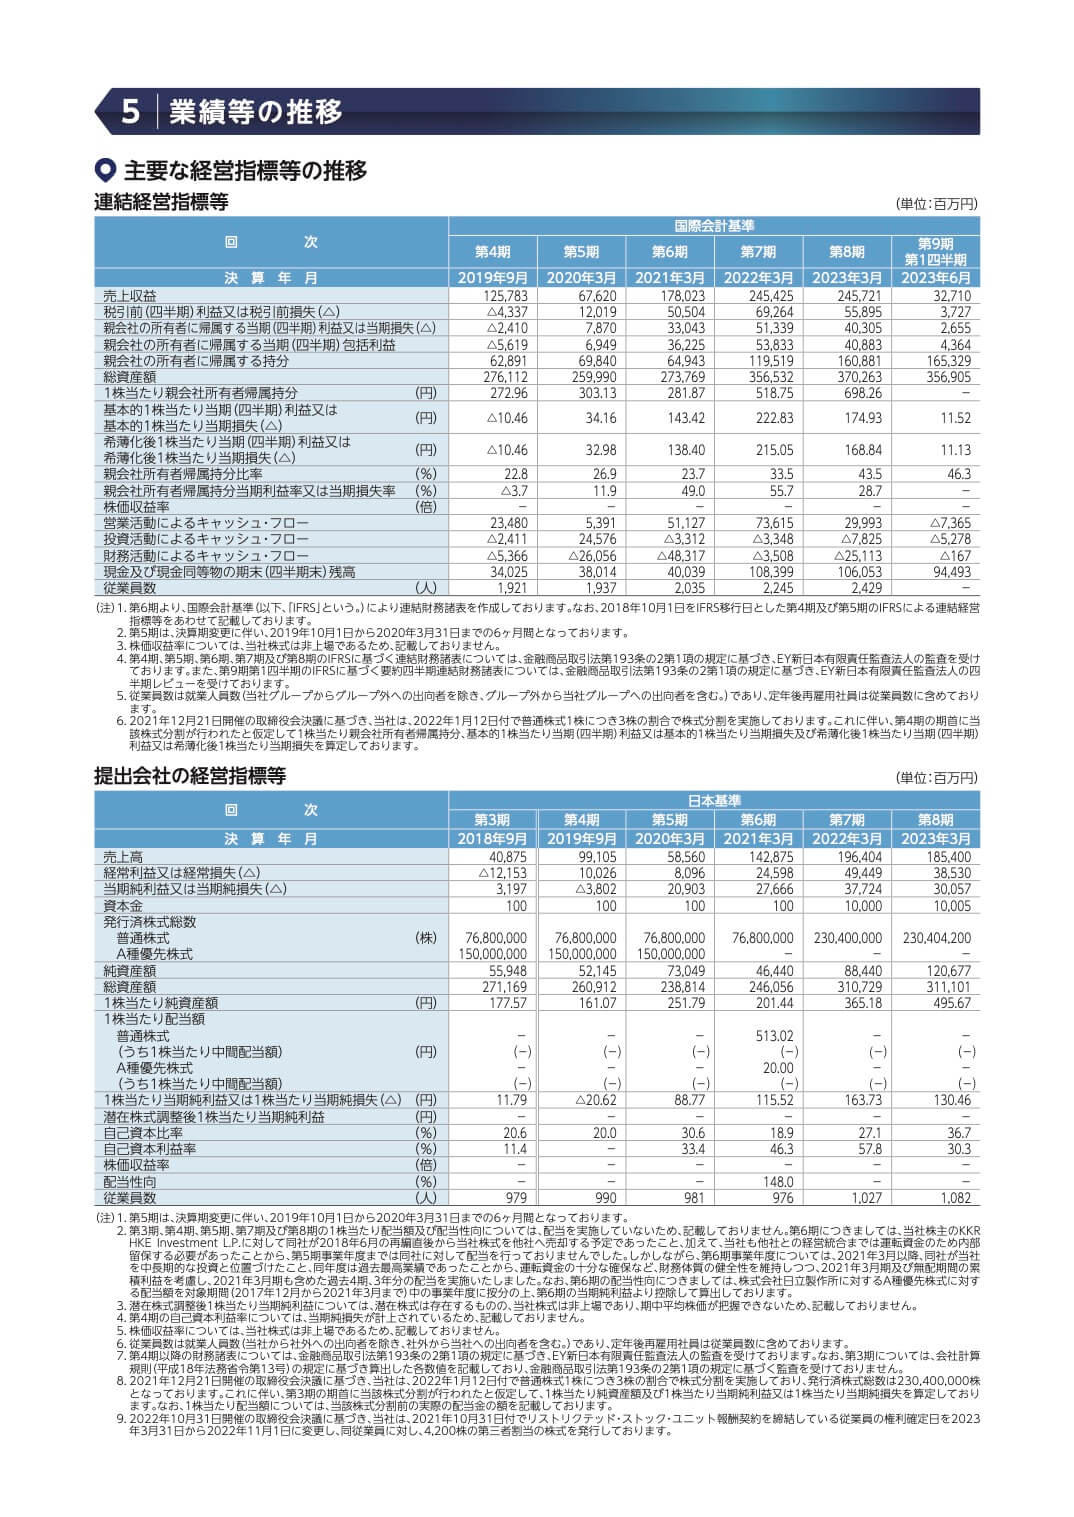 KOKUSAI ELECTRIC(6525)の主要な経営指標等の推移